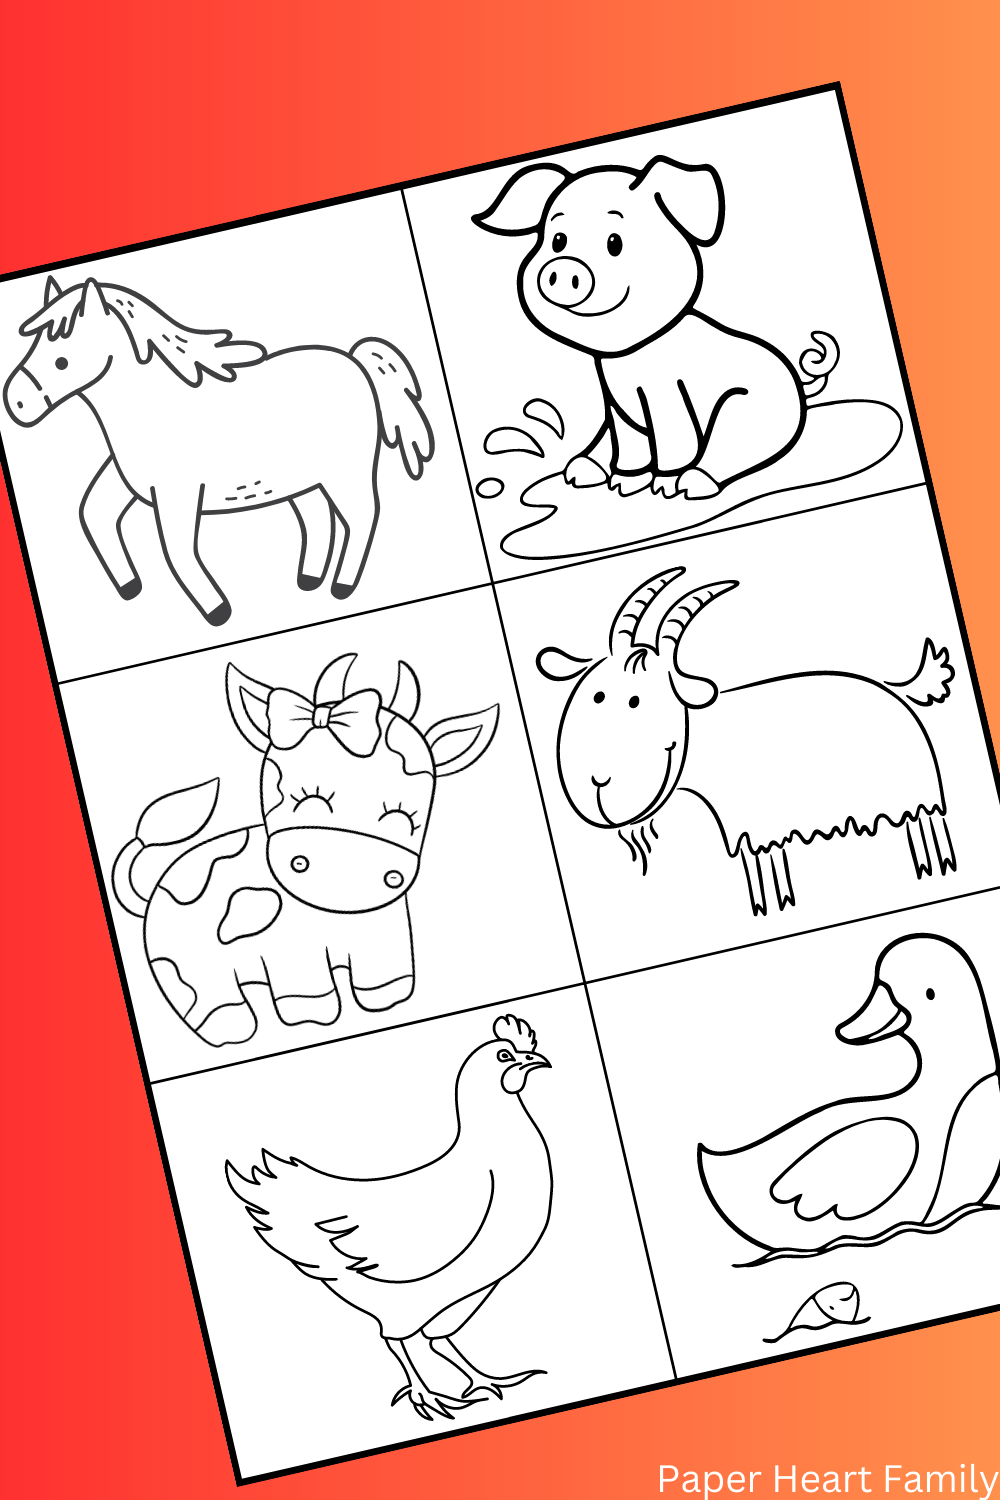 Farm Animal Drawing Ideas For Kids